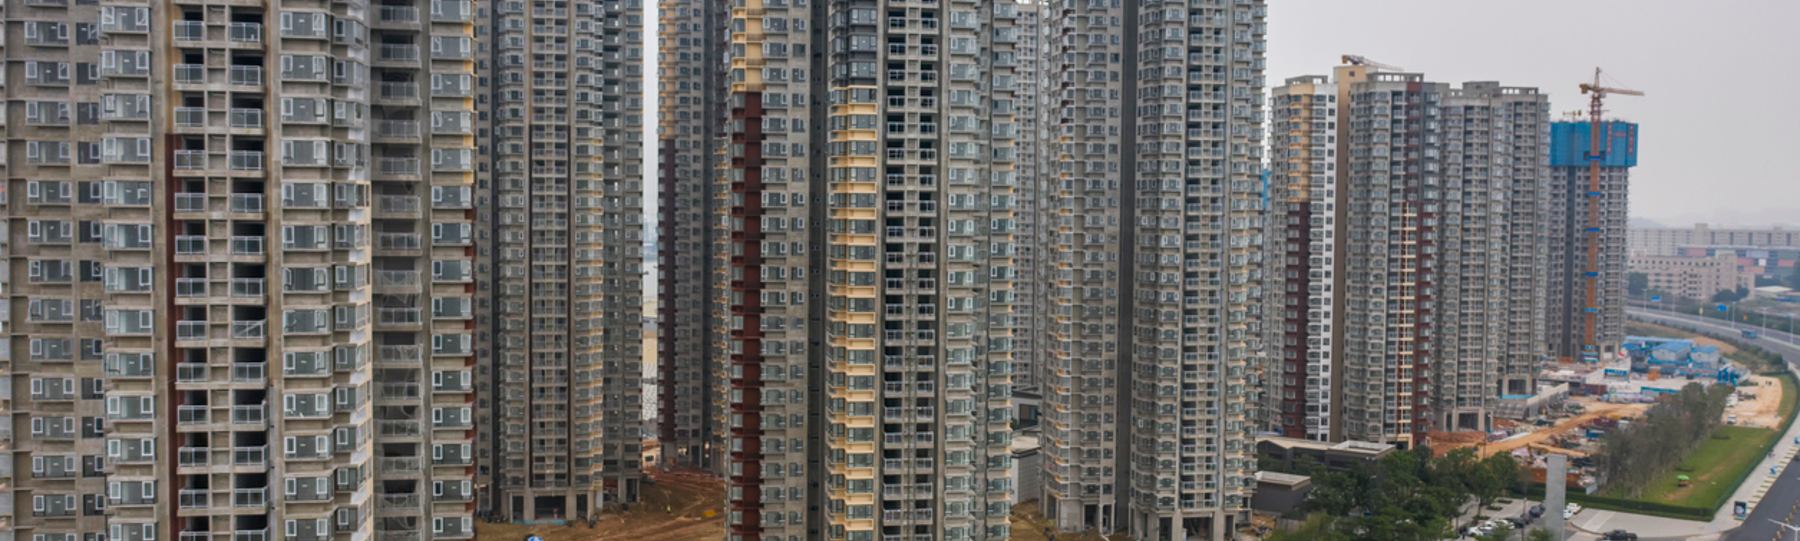 China's deflating property market threatens wider economic trouble